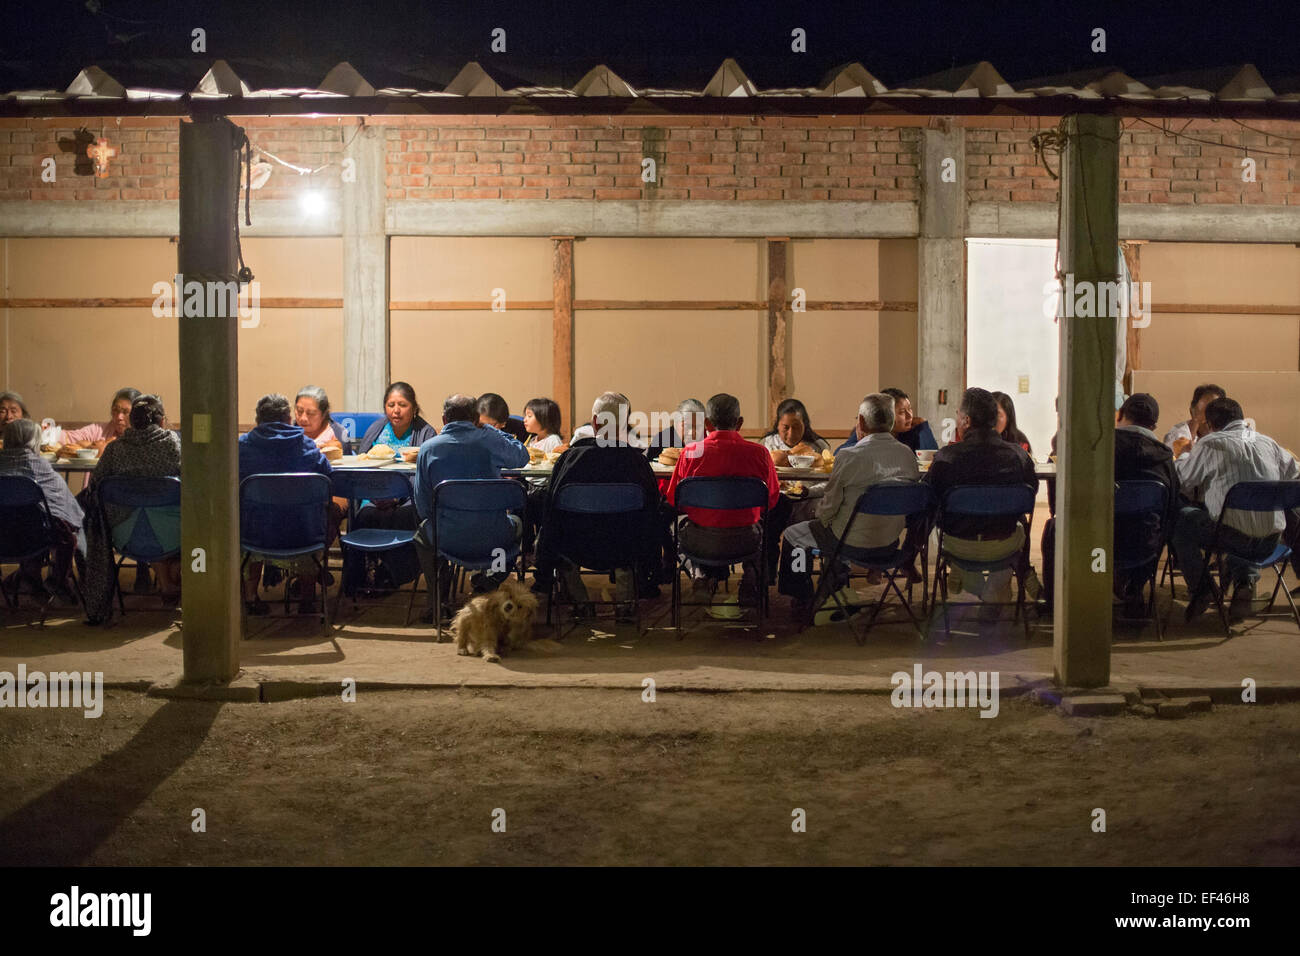 San Sebastian Abasolo, Oaxaca, Mexiko - Bewohner von San Sebastian Abasolo teilen sich ein Mahlzeit während. Stockfoto